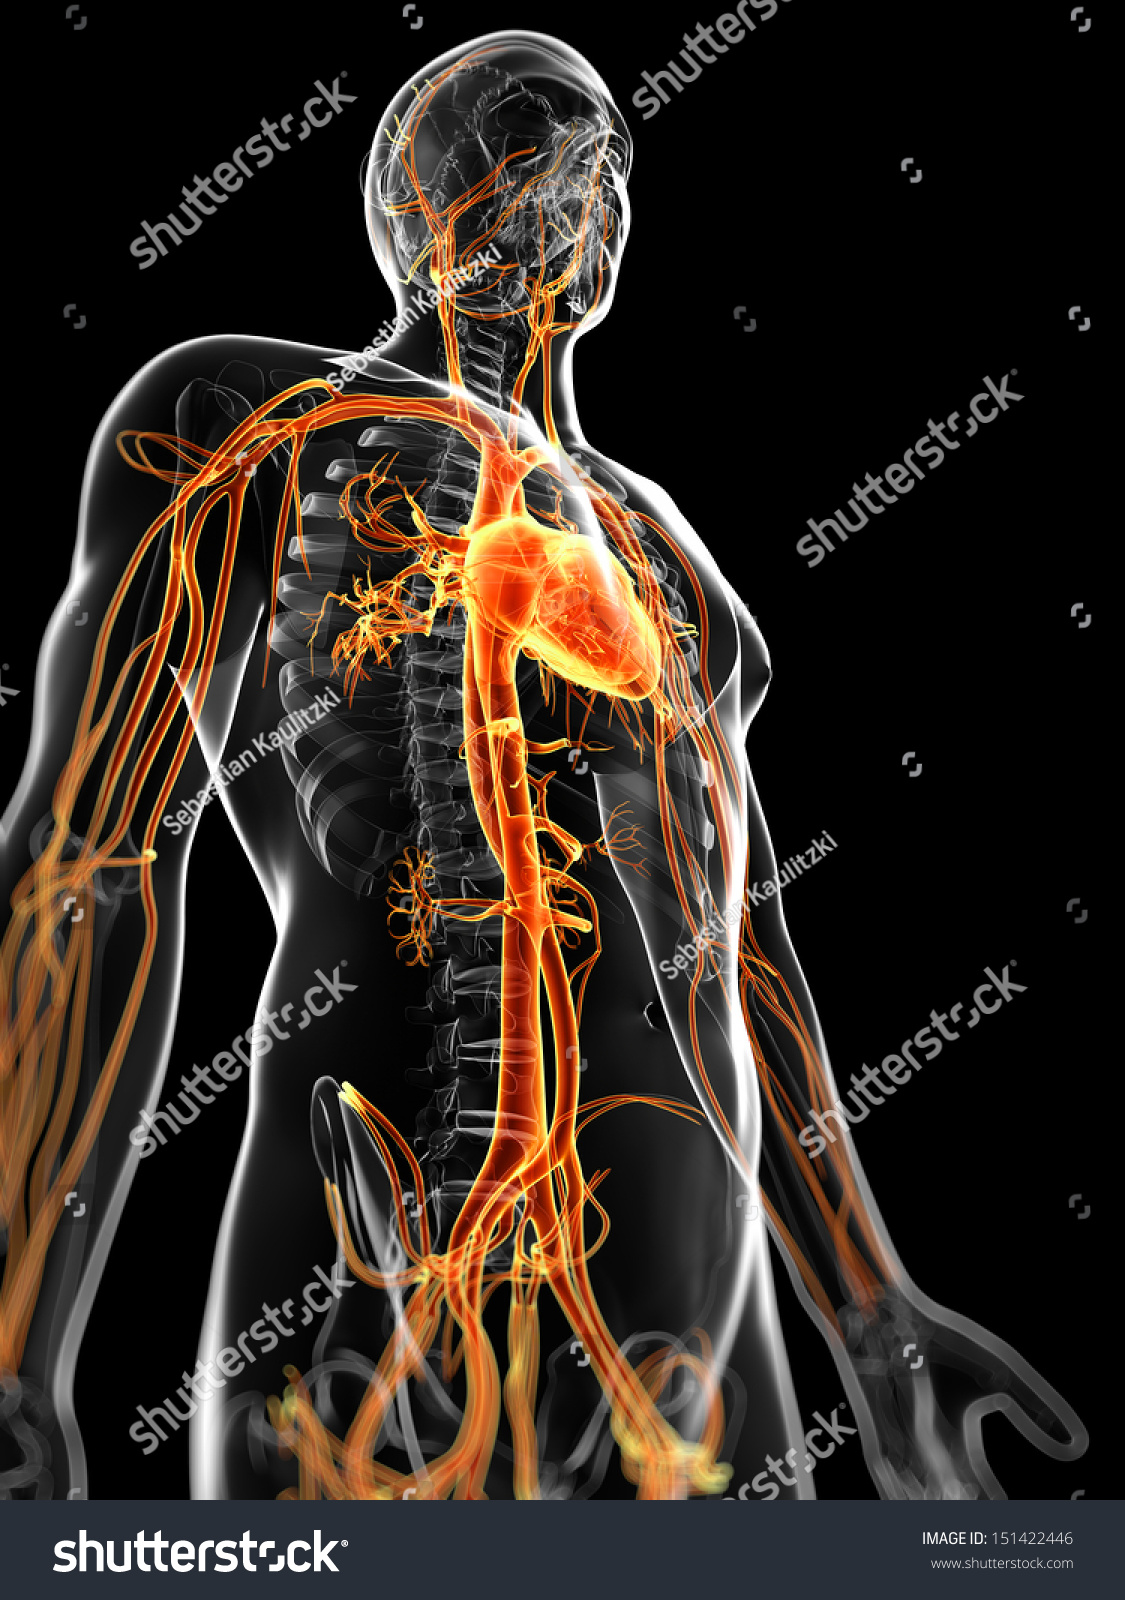 3d Rendered Illustration Of The Male Vascular System - 151422446 ...